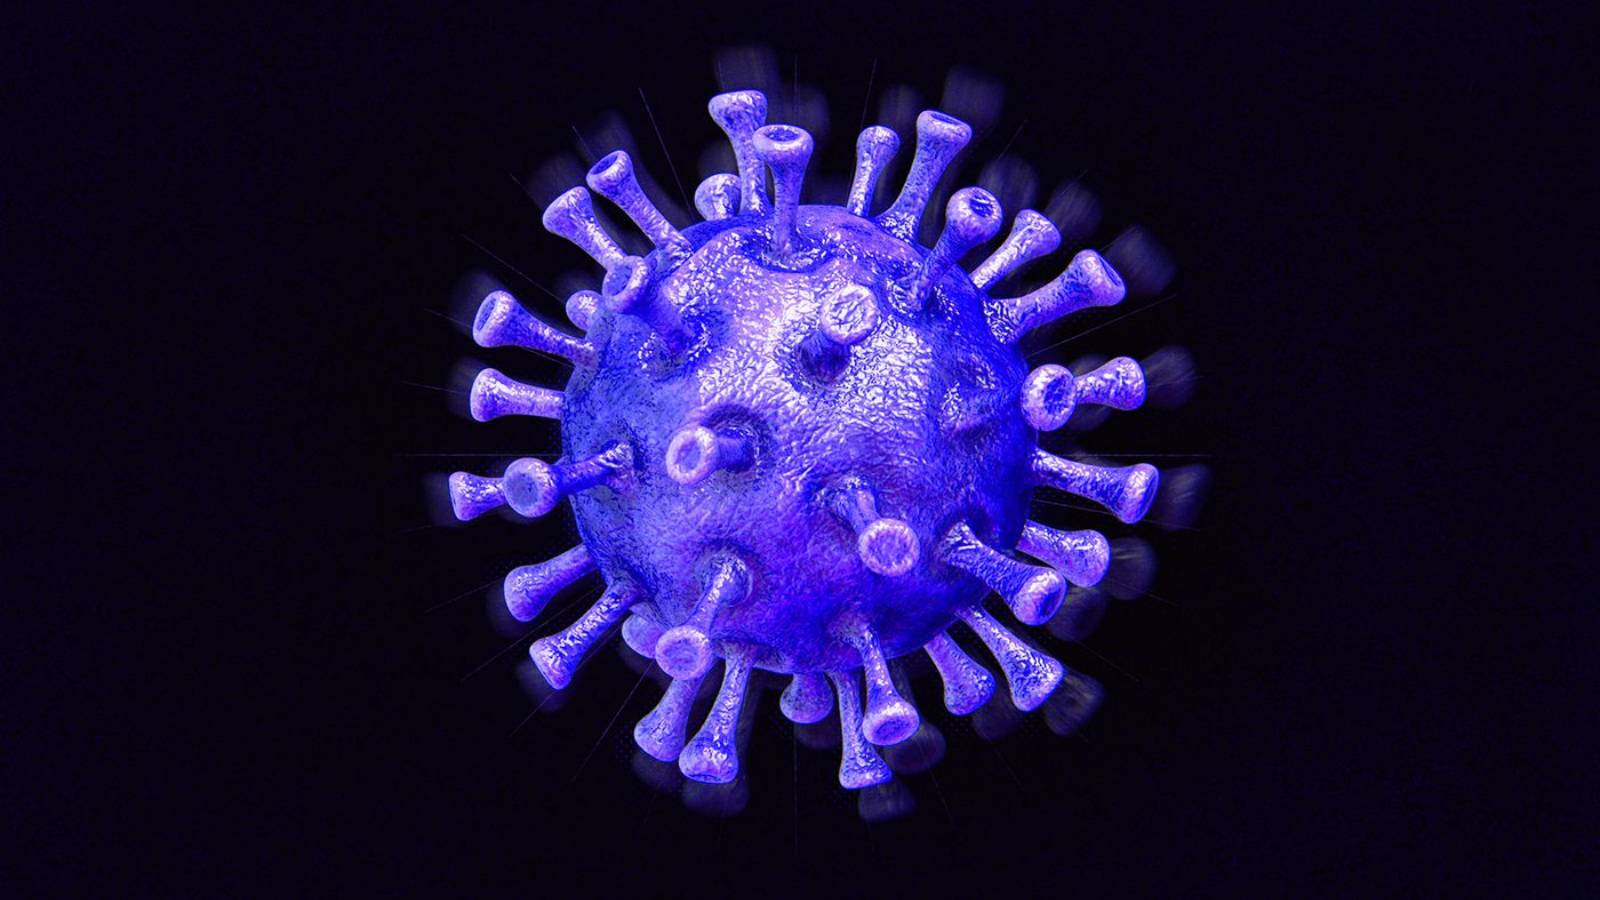 coronavirus romania noi cazuri 22 ianuarie